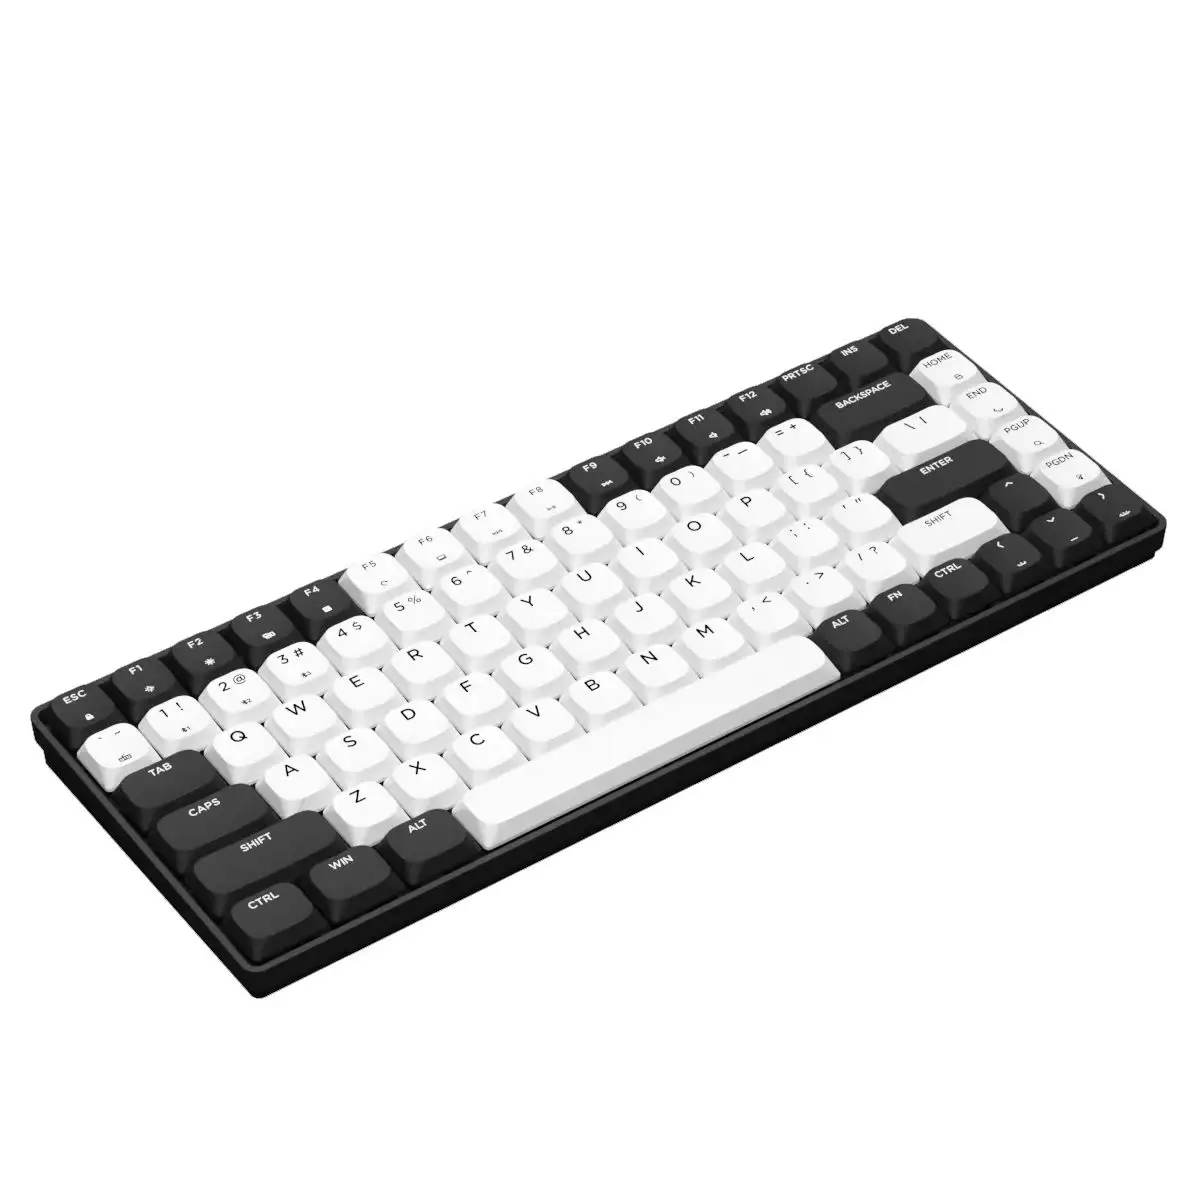 OEM Keyboard komputer nirkabel, papan ketik komputer nirkabel mekanik 82 kunci DIY untuk Desktop PC Gaming